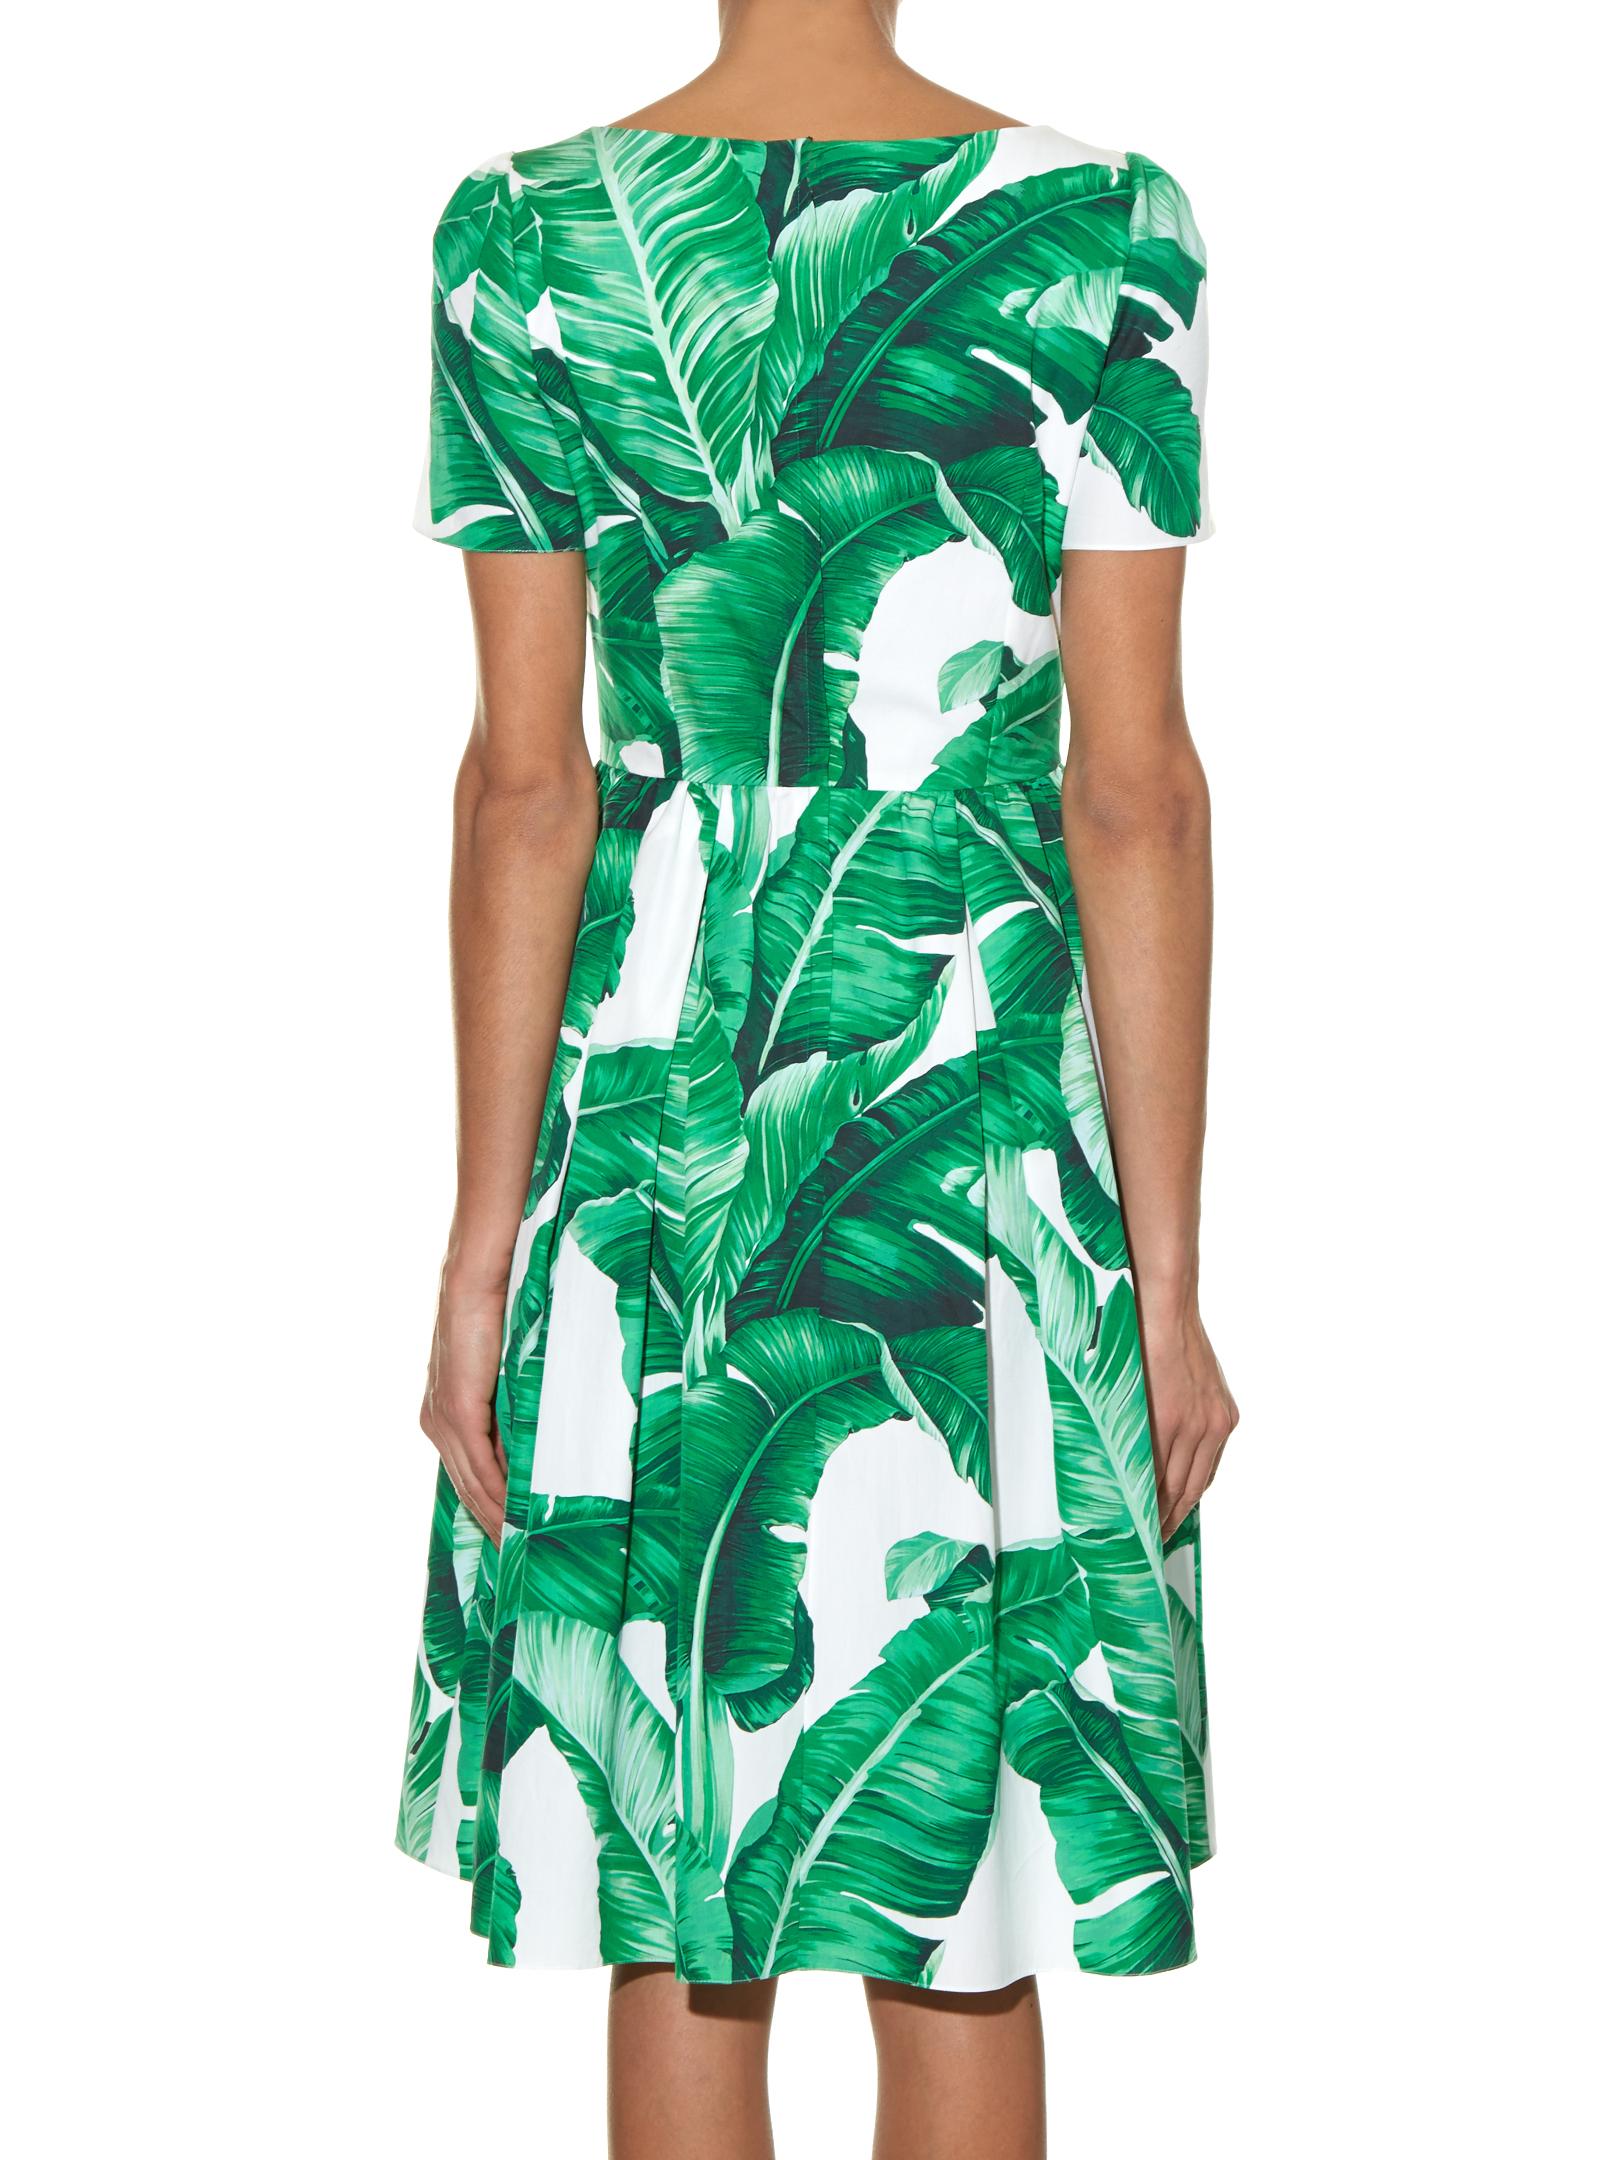 Dolce & Gabbana Banana Leaf-print Dress in Green - Lyst